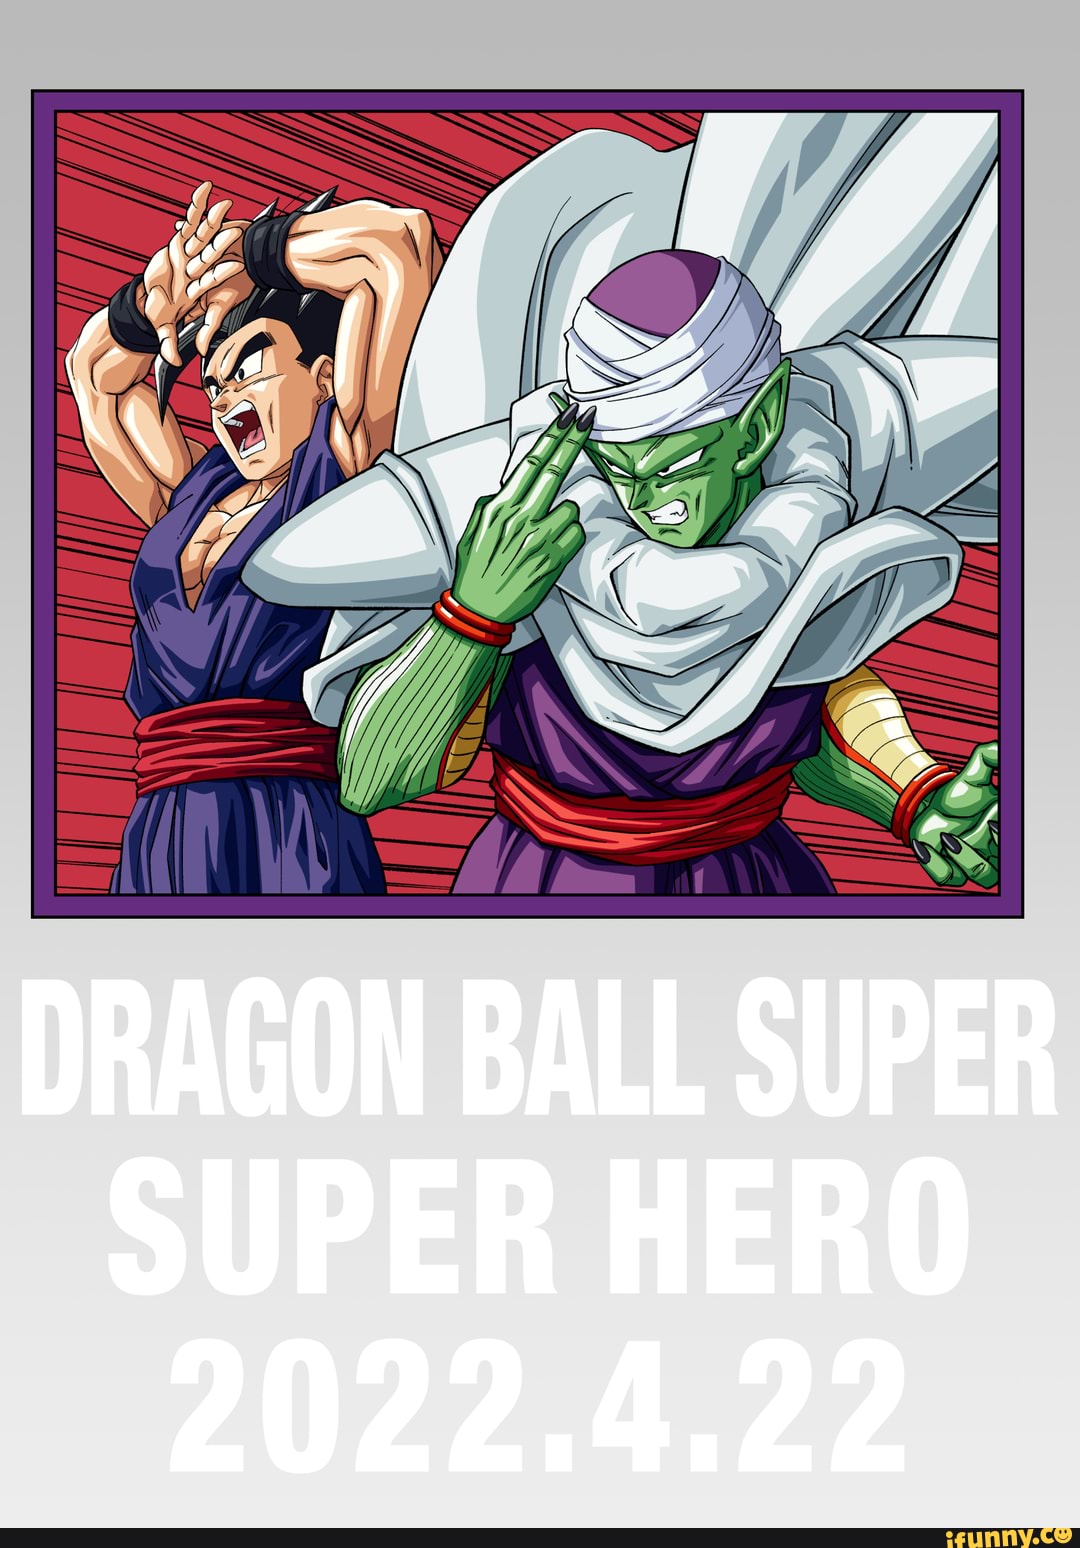 Dragon Ball Super: Super Herói  Dublador de Piccolo comenta sobre